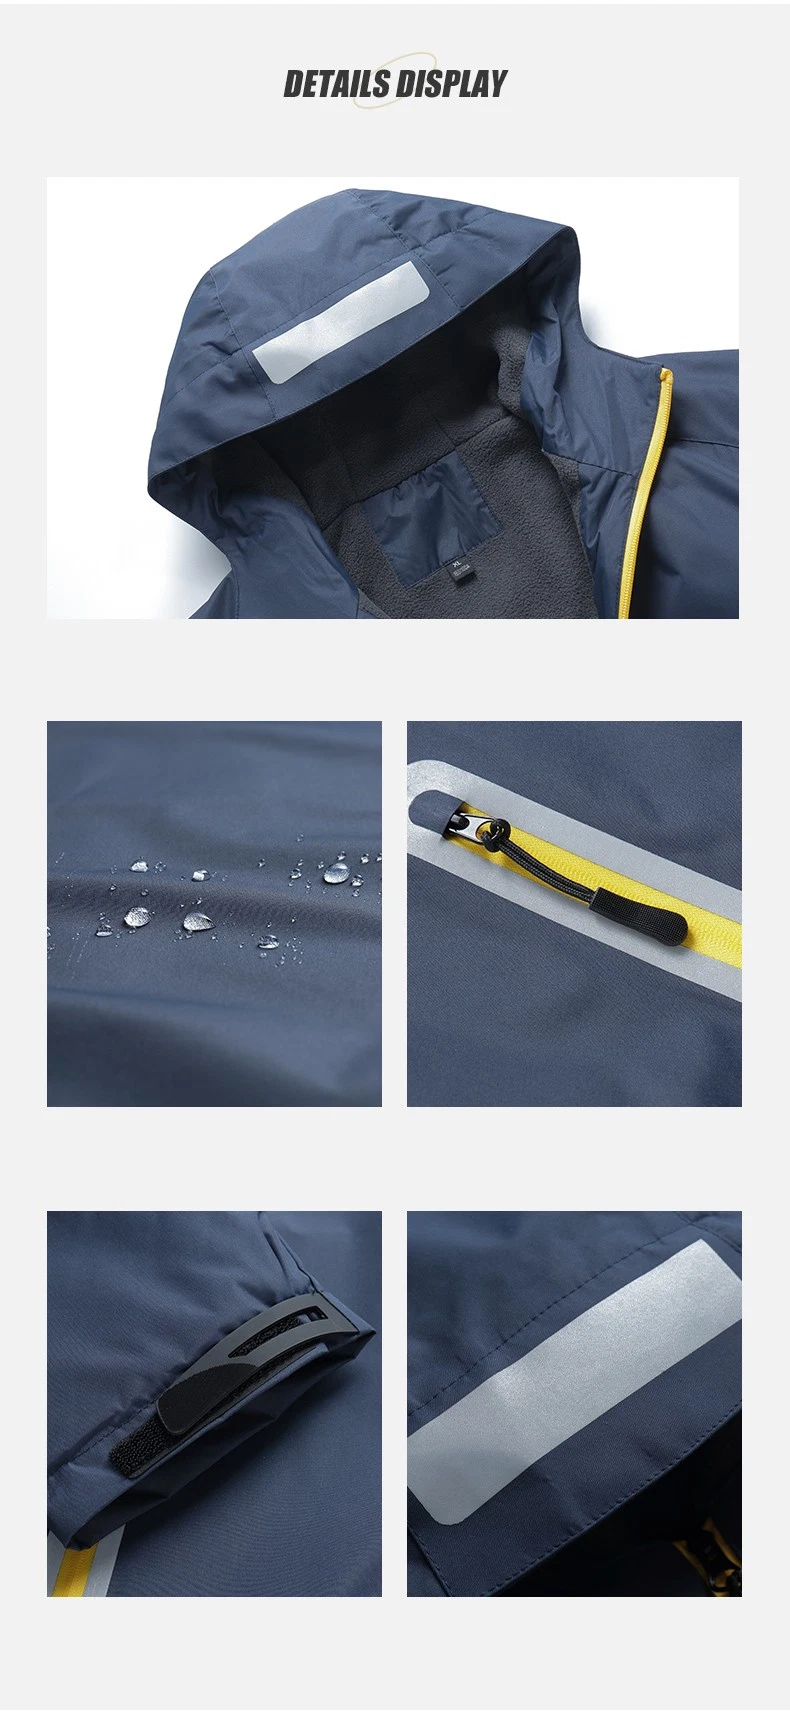 Manufacturers Wholesale Outdoor Storm Jacket Custom Work Clothes Auto Repair Express Cargo Coat Windproof Warm Windbreaker